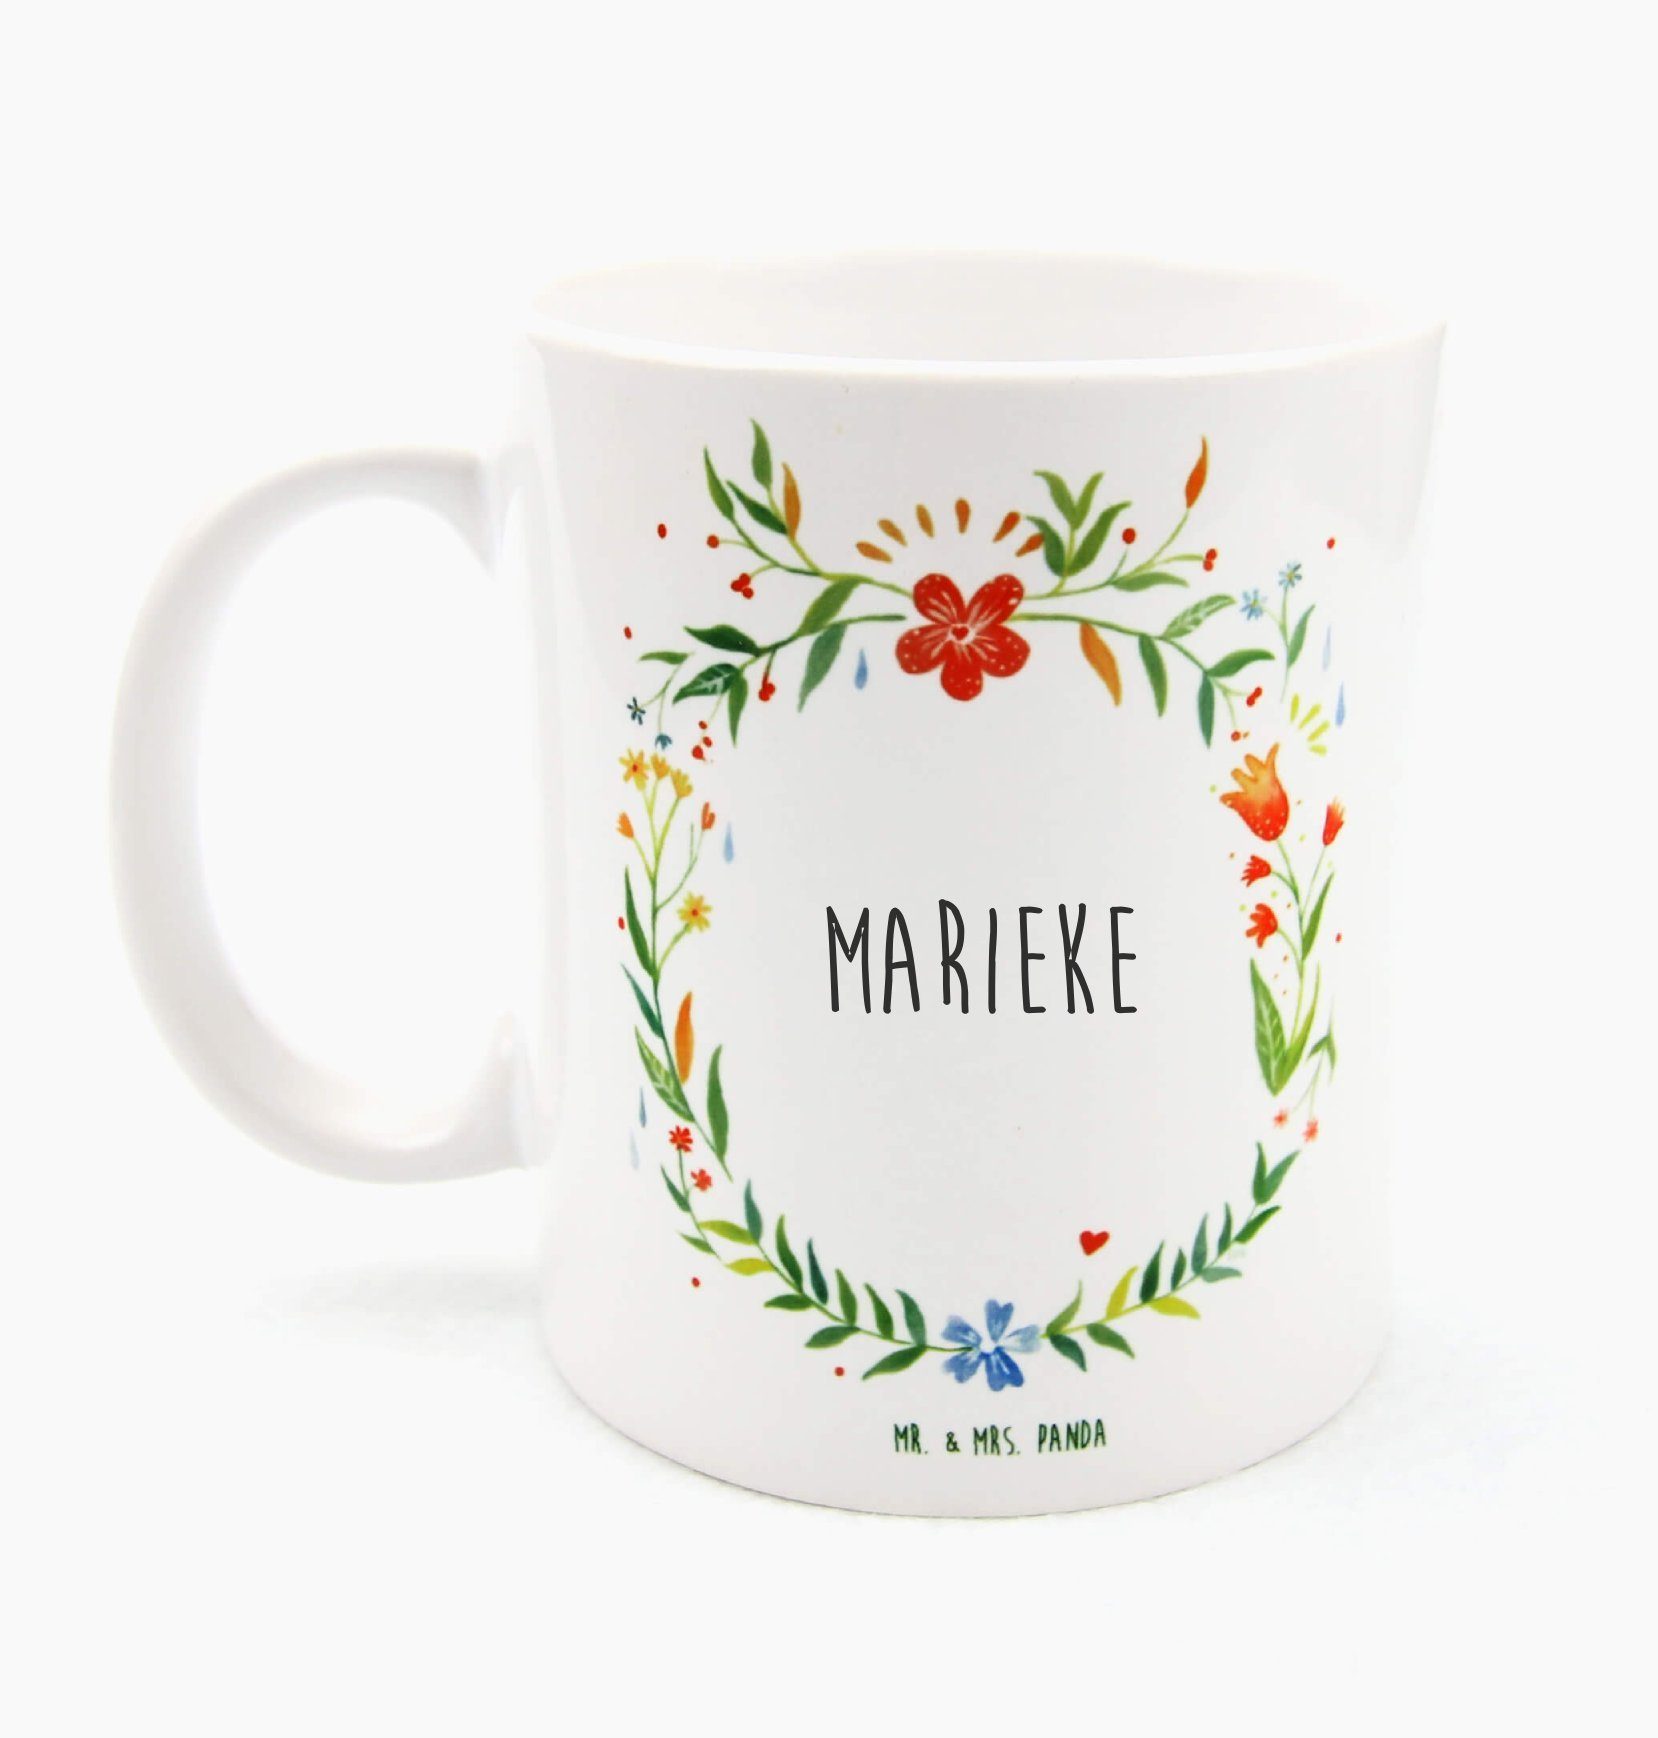 Mr. & Mrs. Panda Tasse Marieke - Geschenk, Becher, Tasse, Kaffeetasse, Büro Tasse, Teetasse, Keramik | Tassen